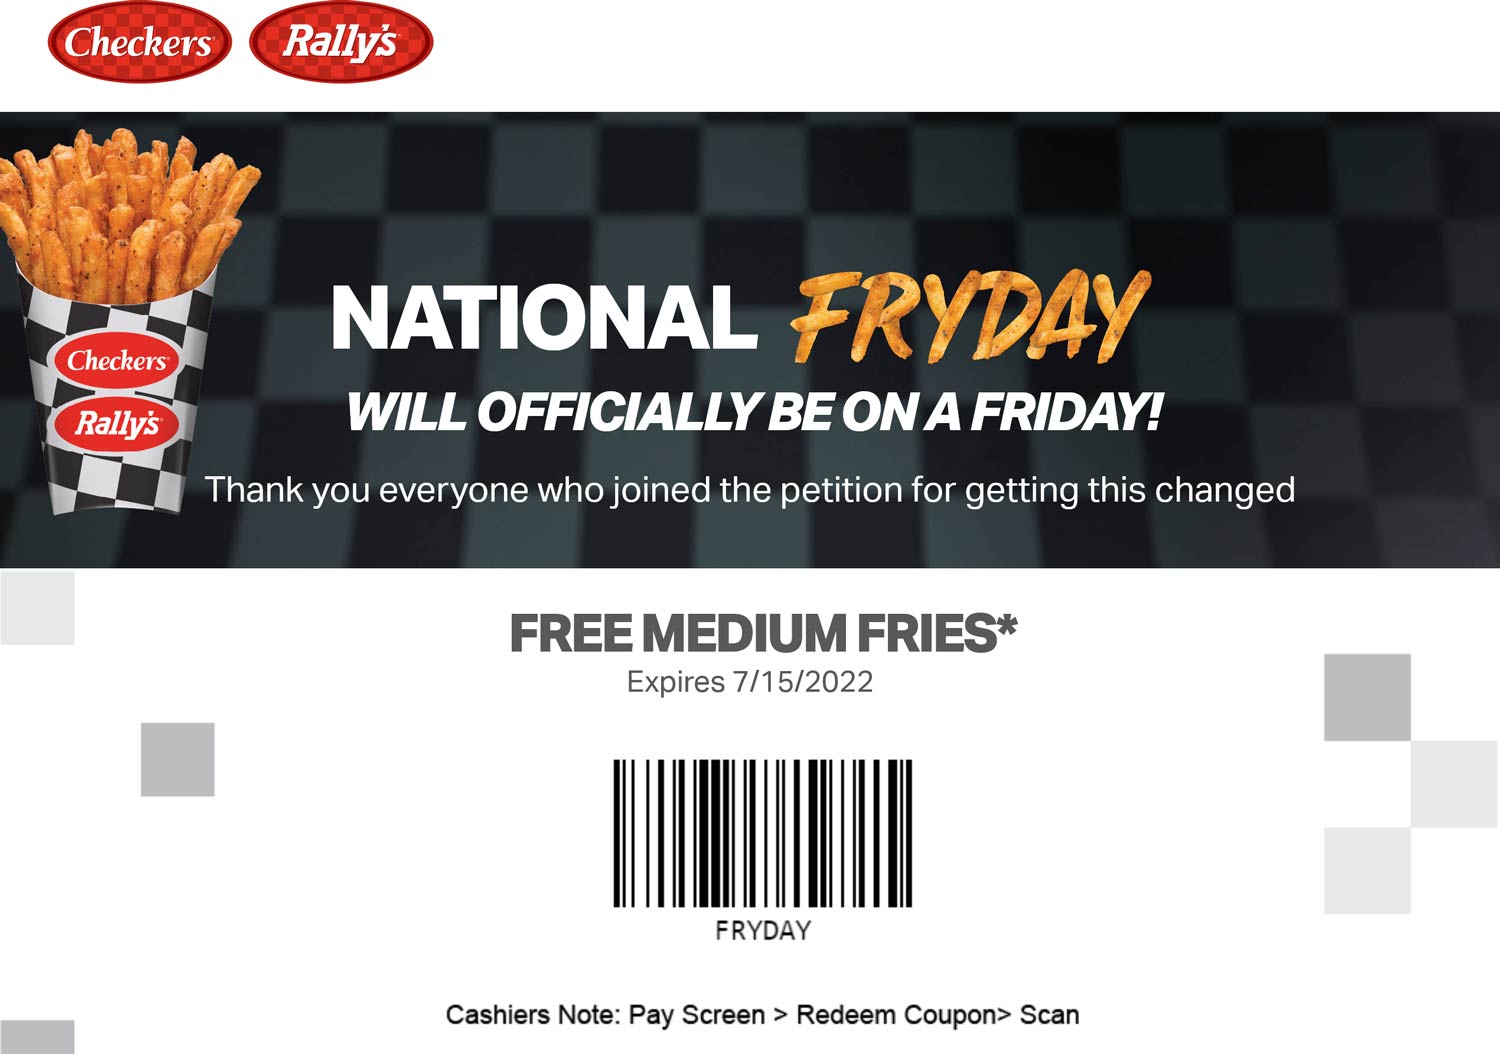 Checkers restaurants Coupon  Free medium fries at Checkers & Rallys restaurants #checkers 